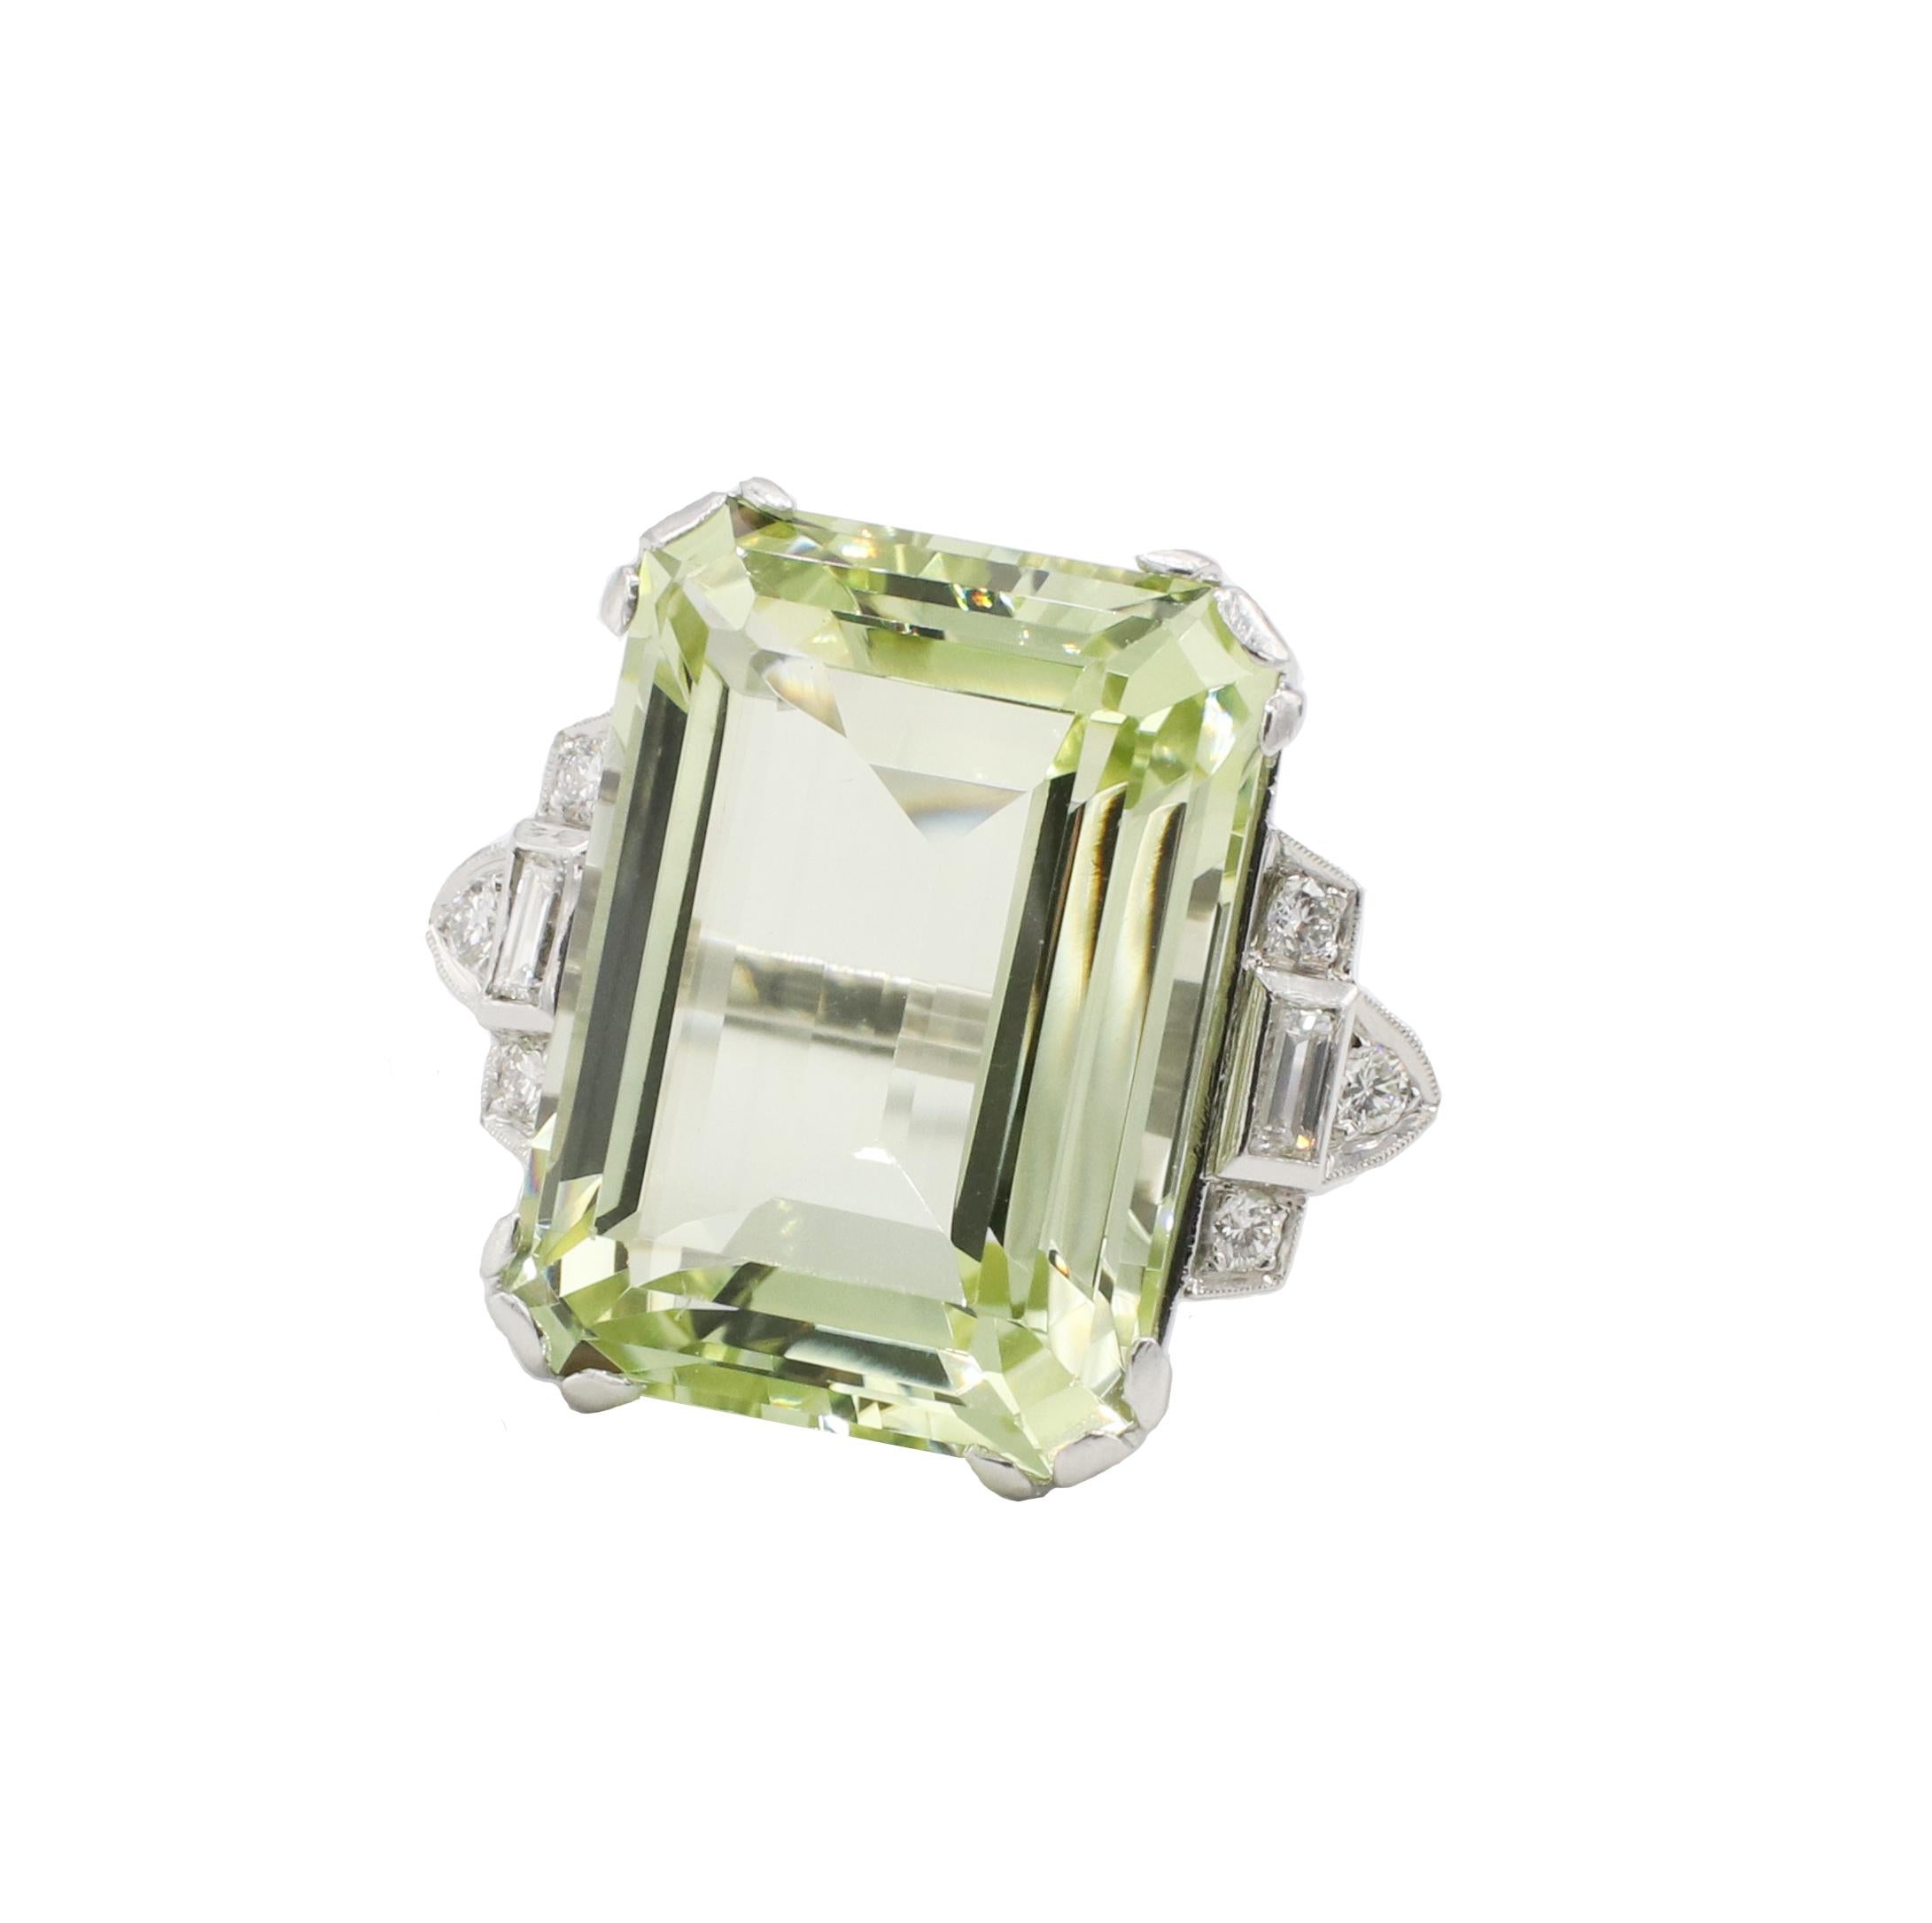 GIA Certified Green Beryl & Natural Diamond Art Deco Platinum Cocktail Ring Signed C.J. Auger
GIA report number: 5221856272
Metal: Platinum
Weight: 14.7 grams
Gemstone: Natural green beryl 20.1 x 14.6 x 9.45mm, approx. 19.60 carats
Diamonds: 6 round